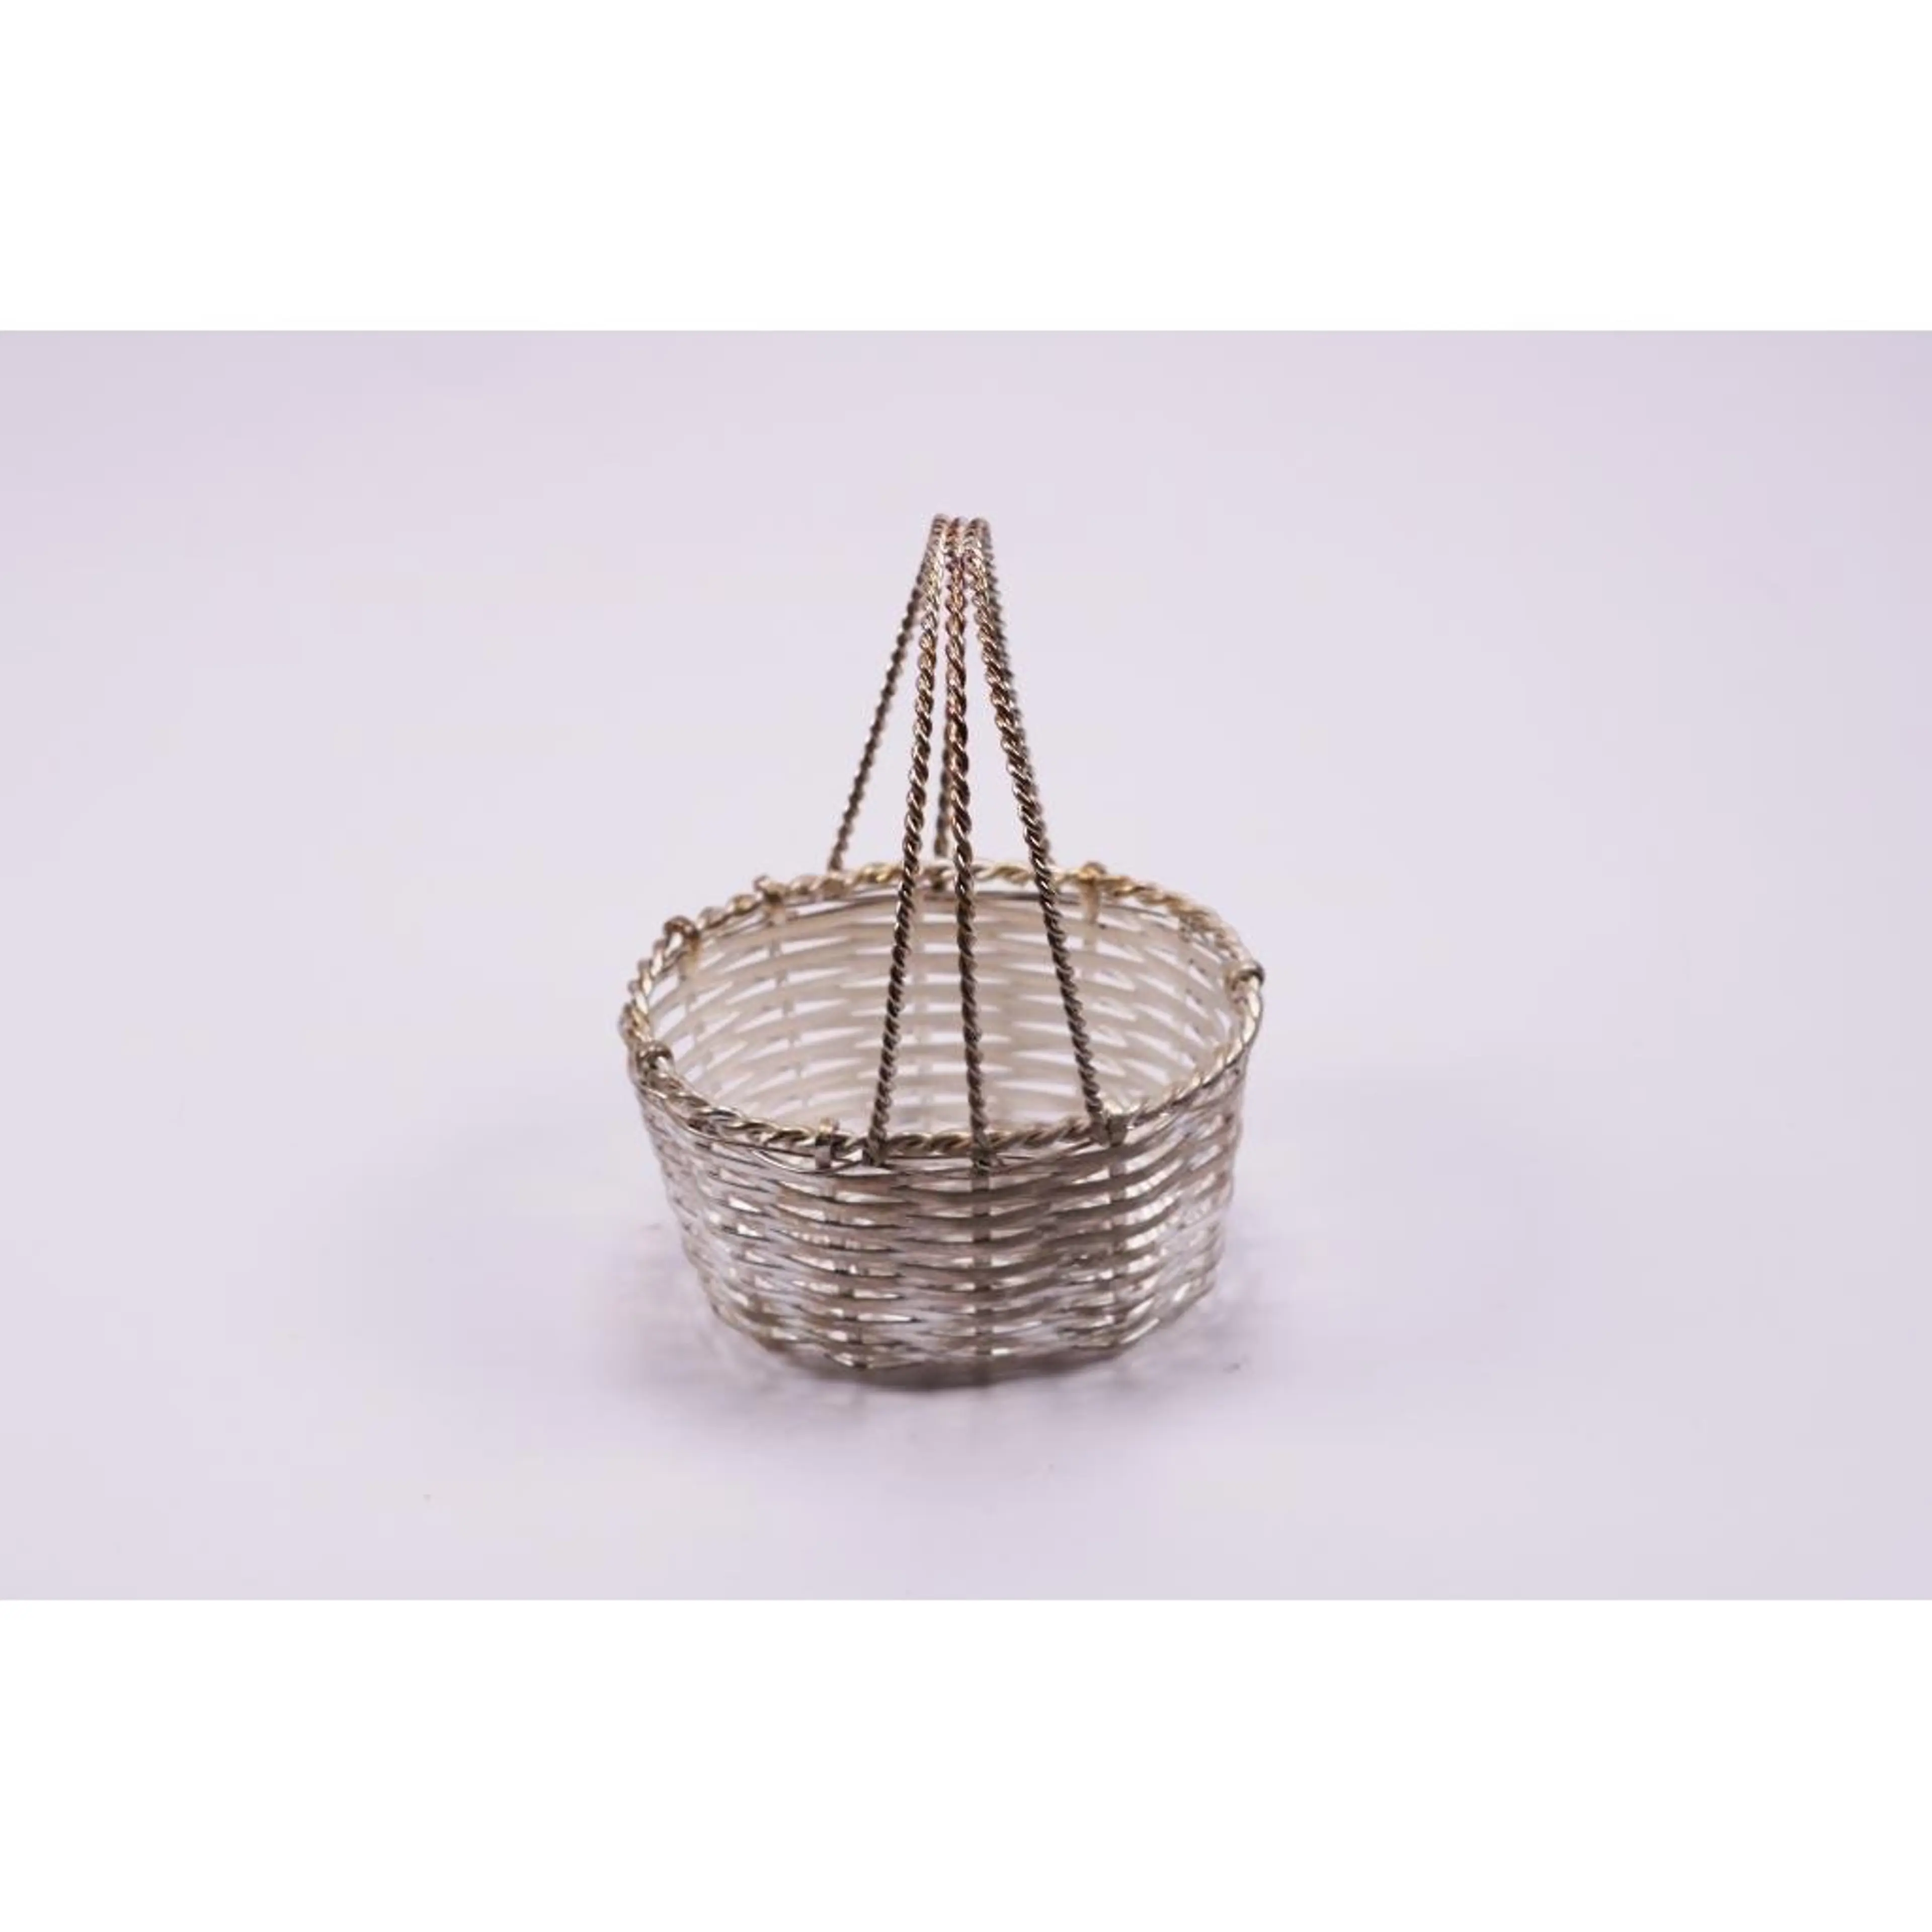  Vintage Silver Woven Baskets